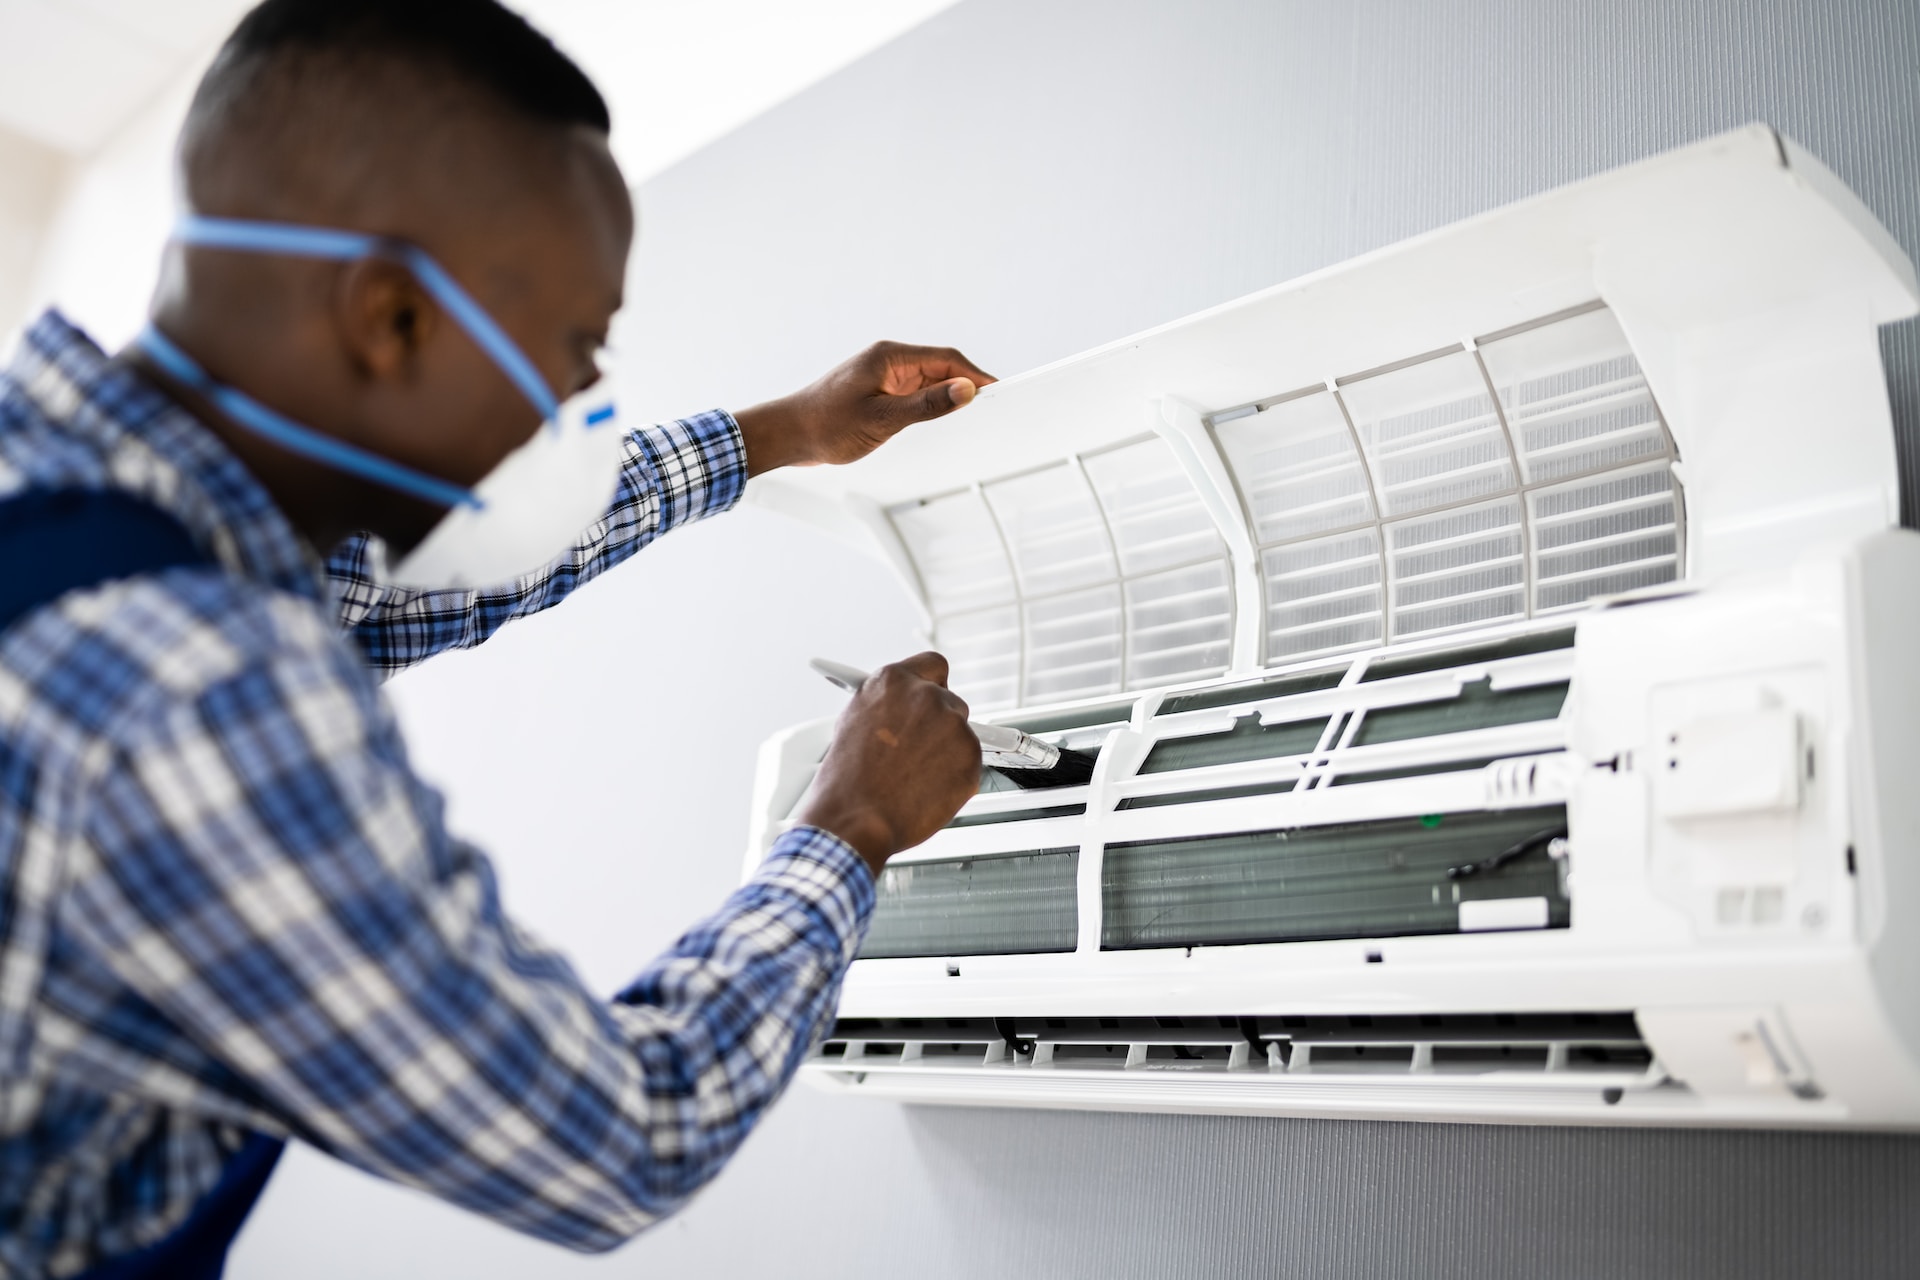 air conditioning maintenance